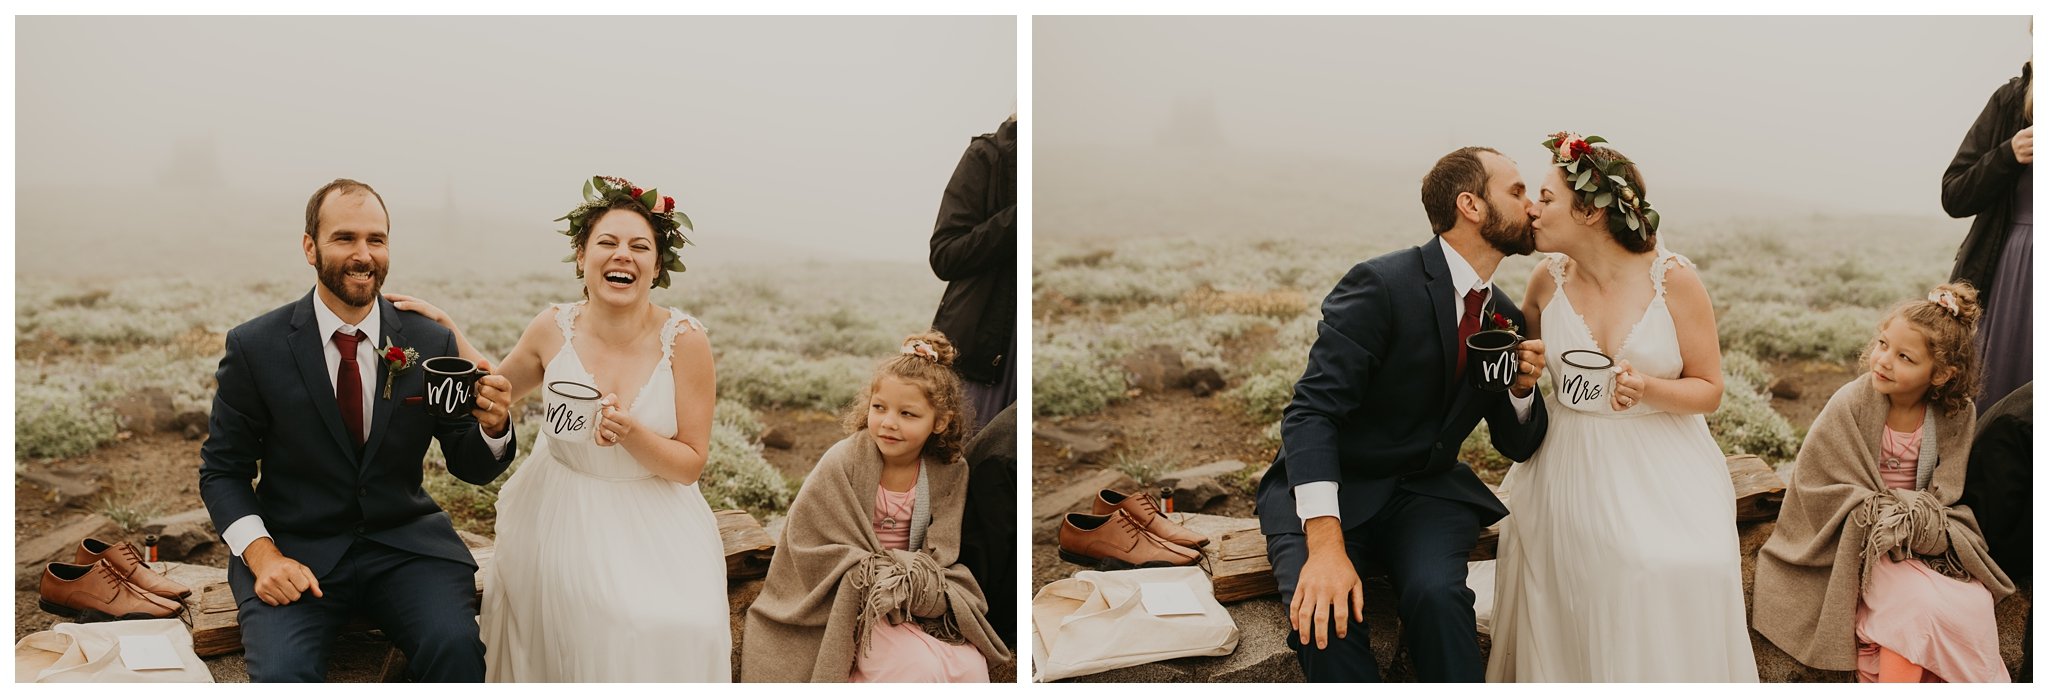 Sarah Gabe Elopement - Mt Rainier, WA - Boise Idaho Family Photographer - Kamra Fuller Photography_0072.jpg